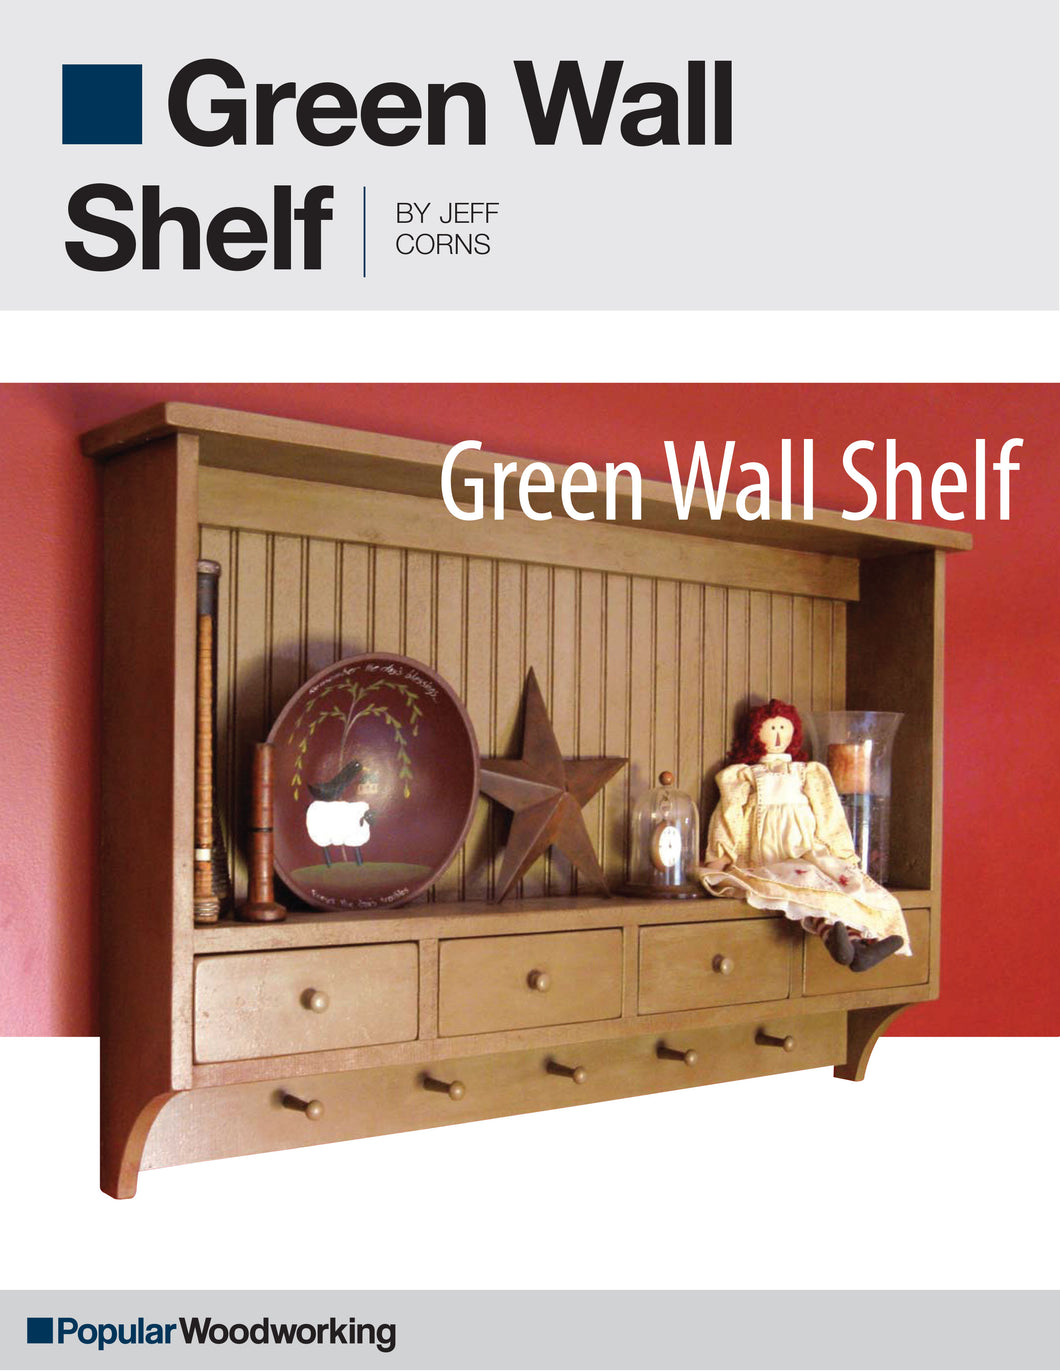 Green Wall Shelf Project Download